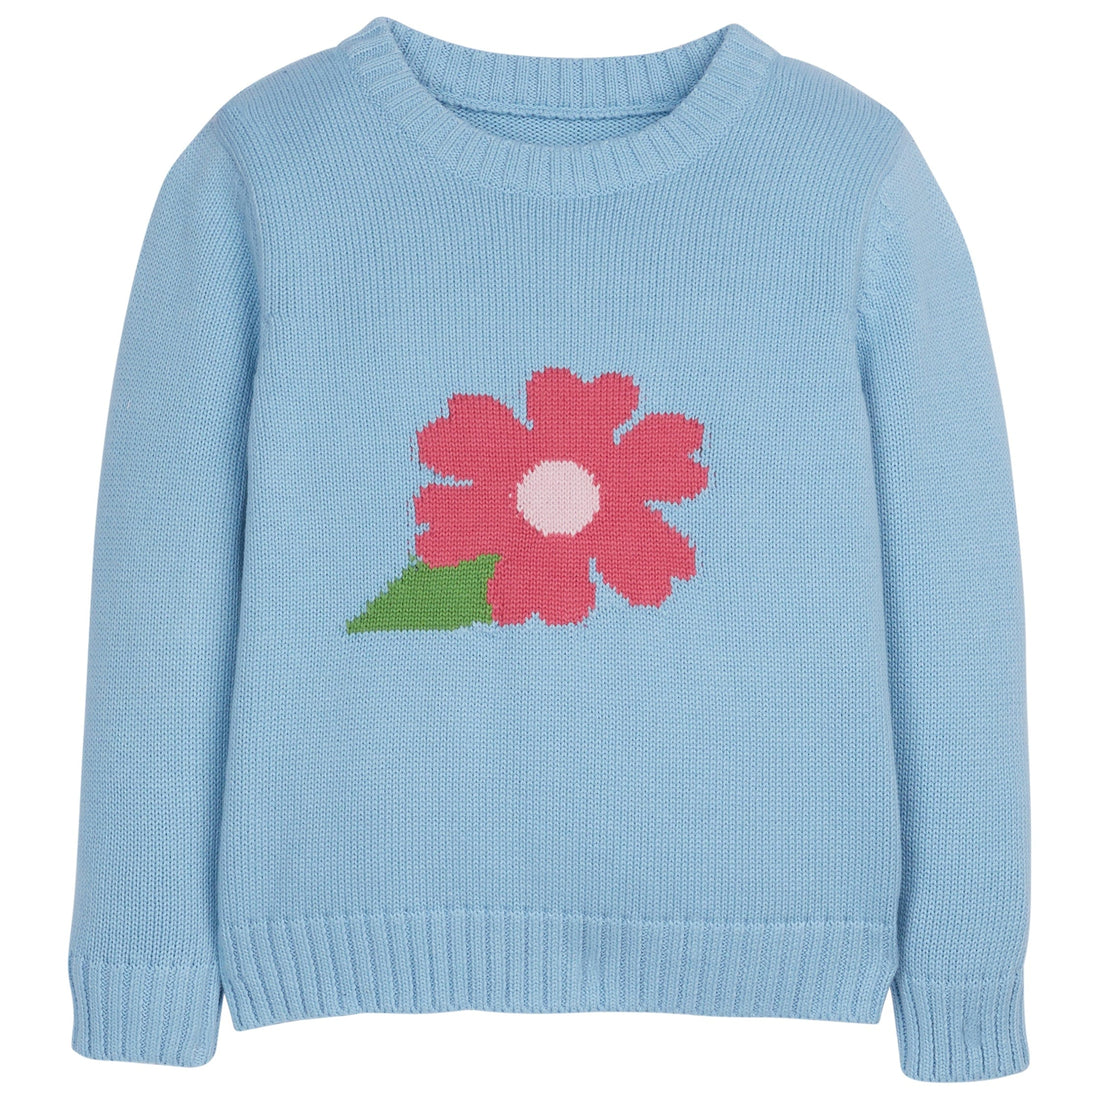 Intarsia Sweater - Fall Blooms, 4T / Blue